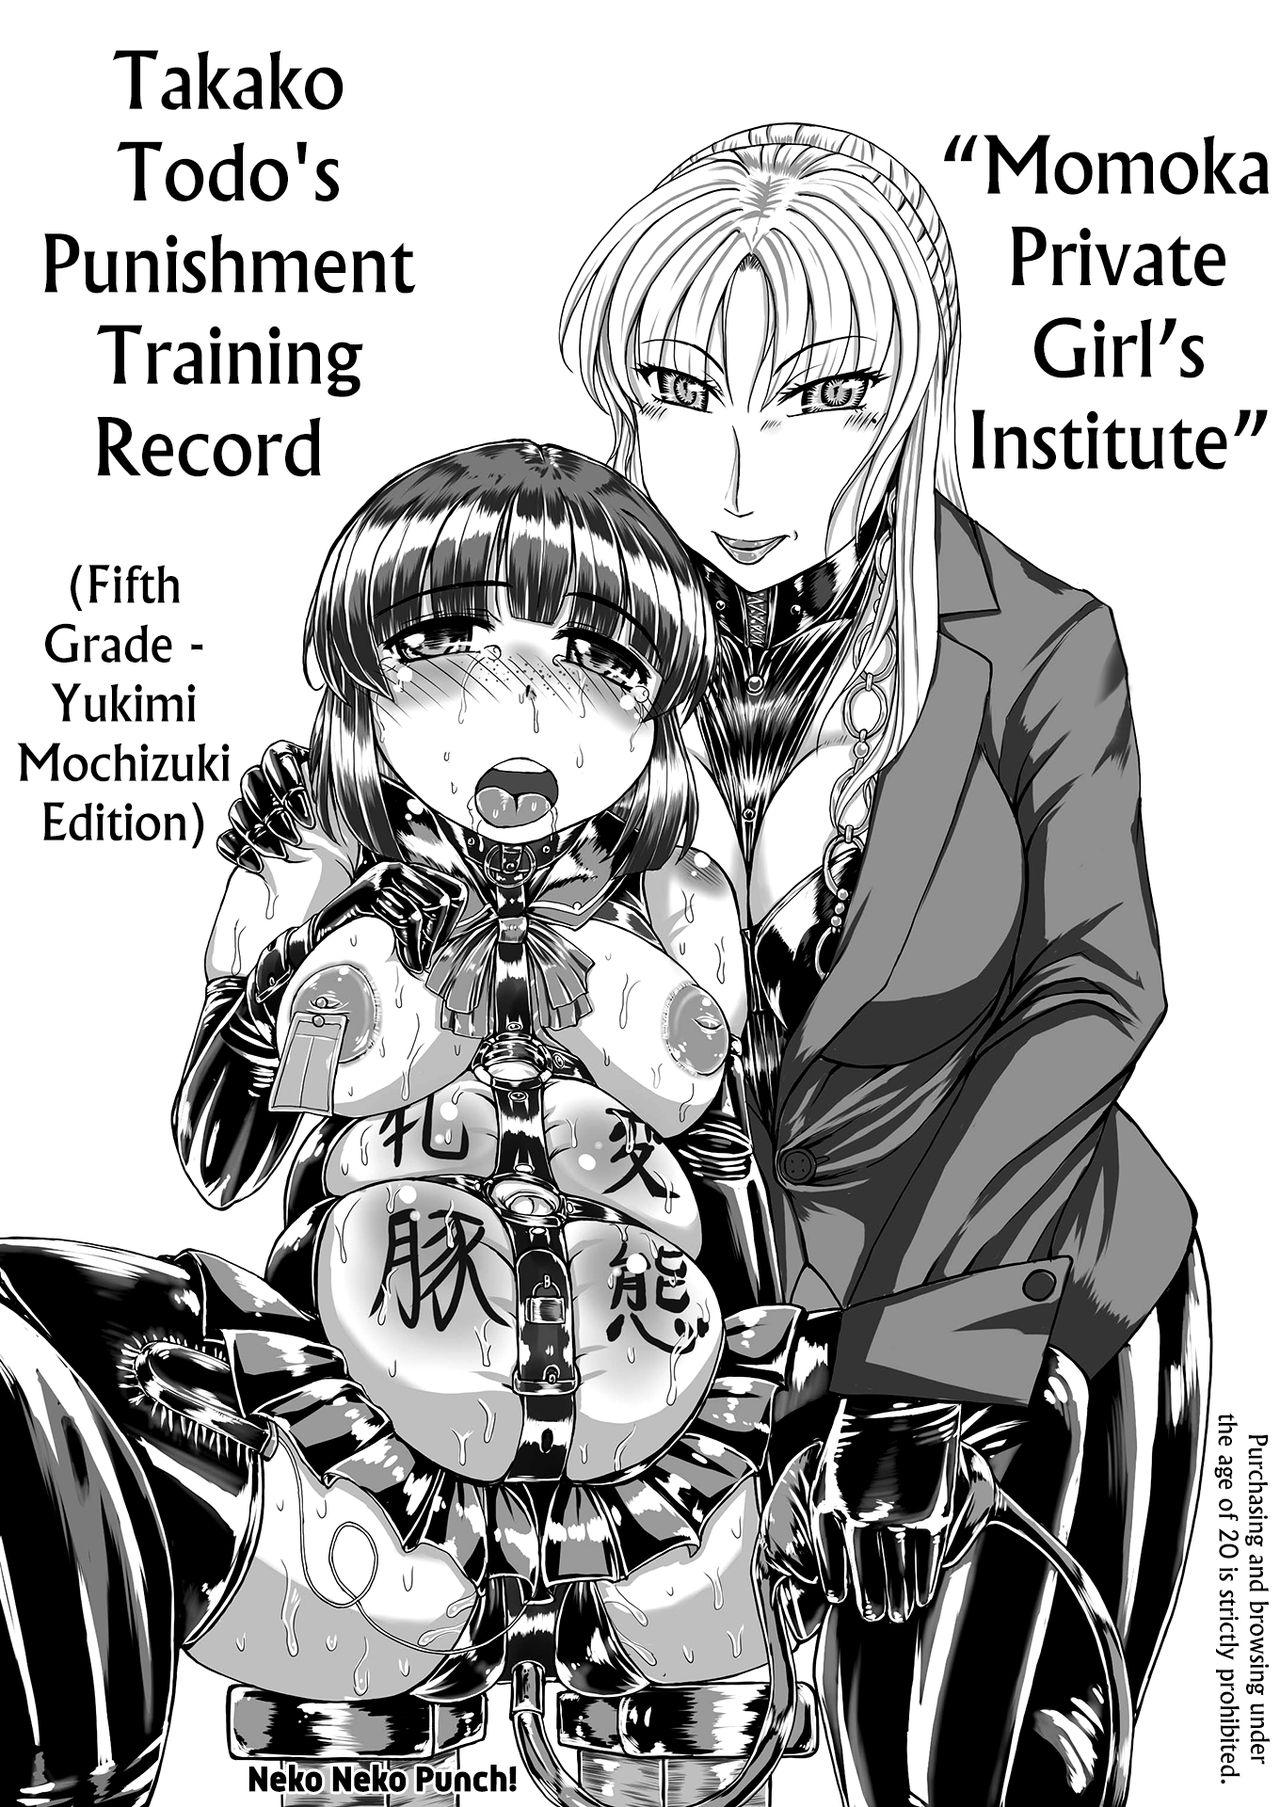 Chichona [Neko Neko Panchu!] [Momoka Private Girls Institute] [Takako Todo's Punishment Training Record] (Fifth Grade - Yukimi Mochizuki Edition) [English] Female Orgasm - Picture 1